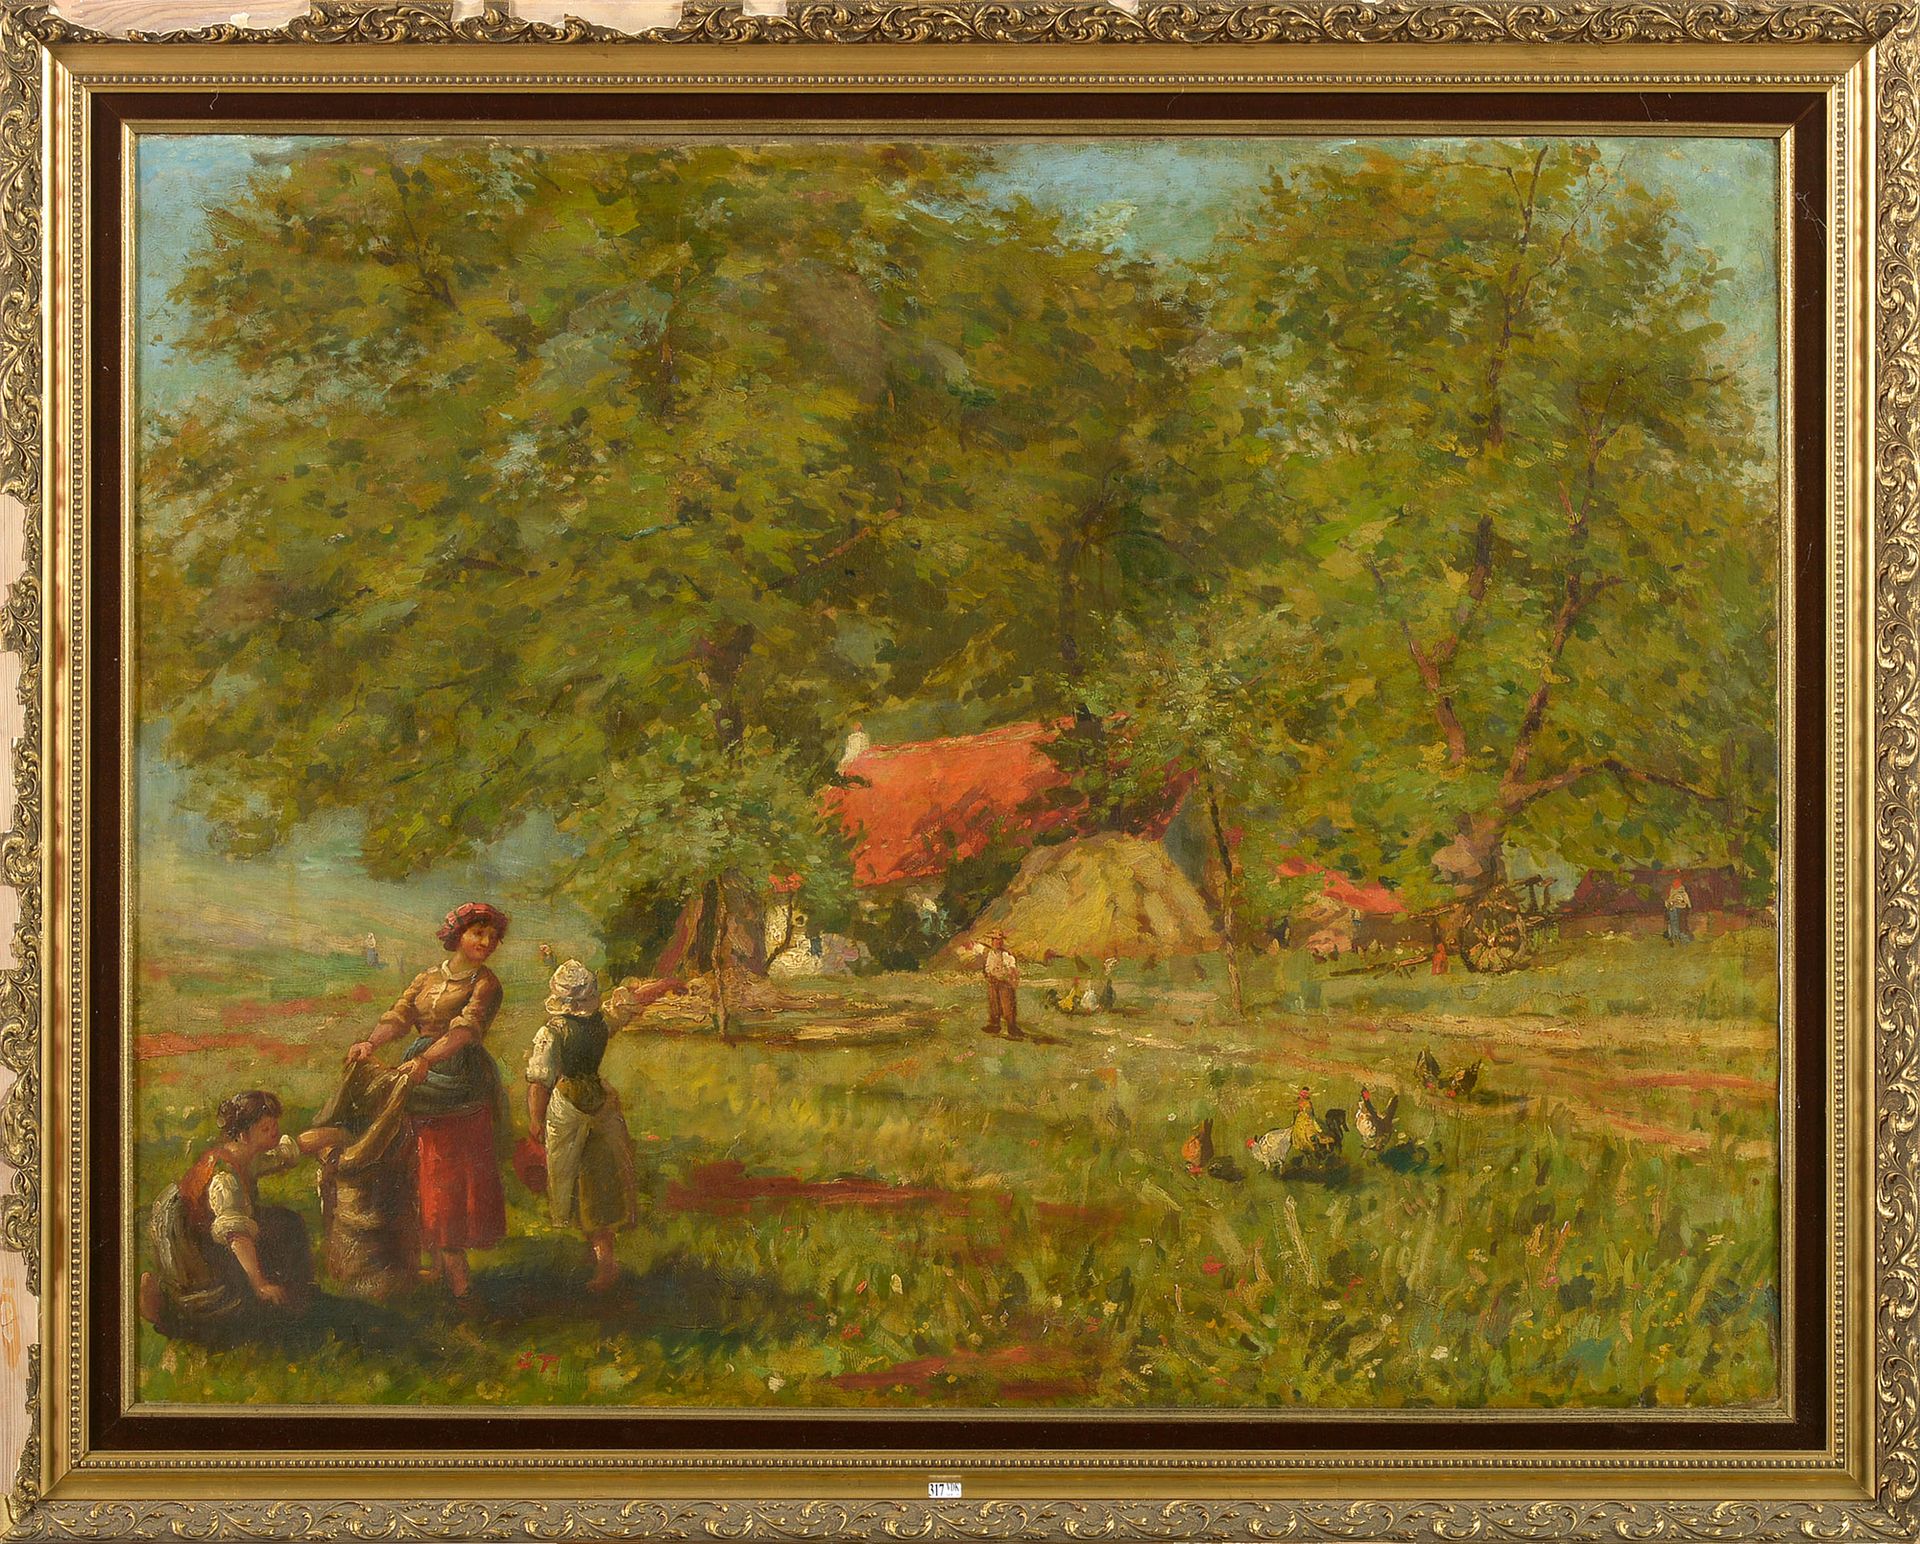 G.T. (XIXème) 镶嵌在画布上的油画《热闹的农场场景》。左下角有G.T.的字样。年代：19世纪。尺寸：+/-100,5x131厘米。